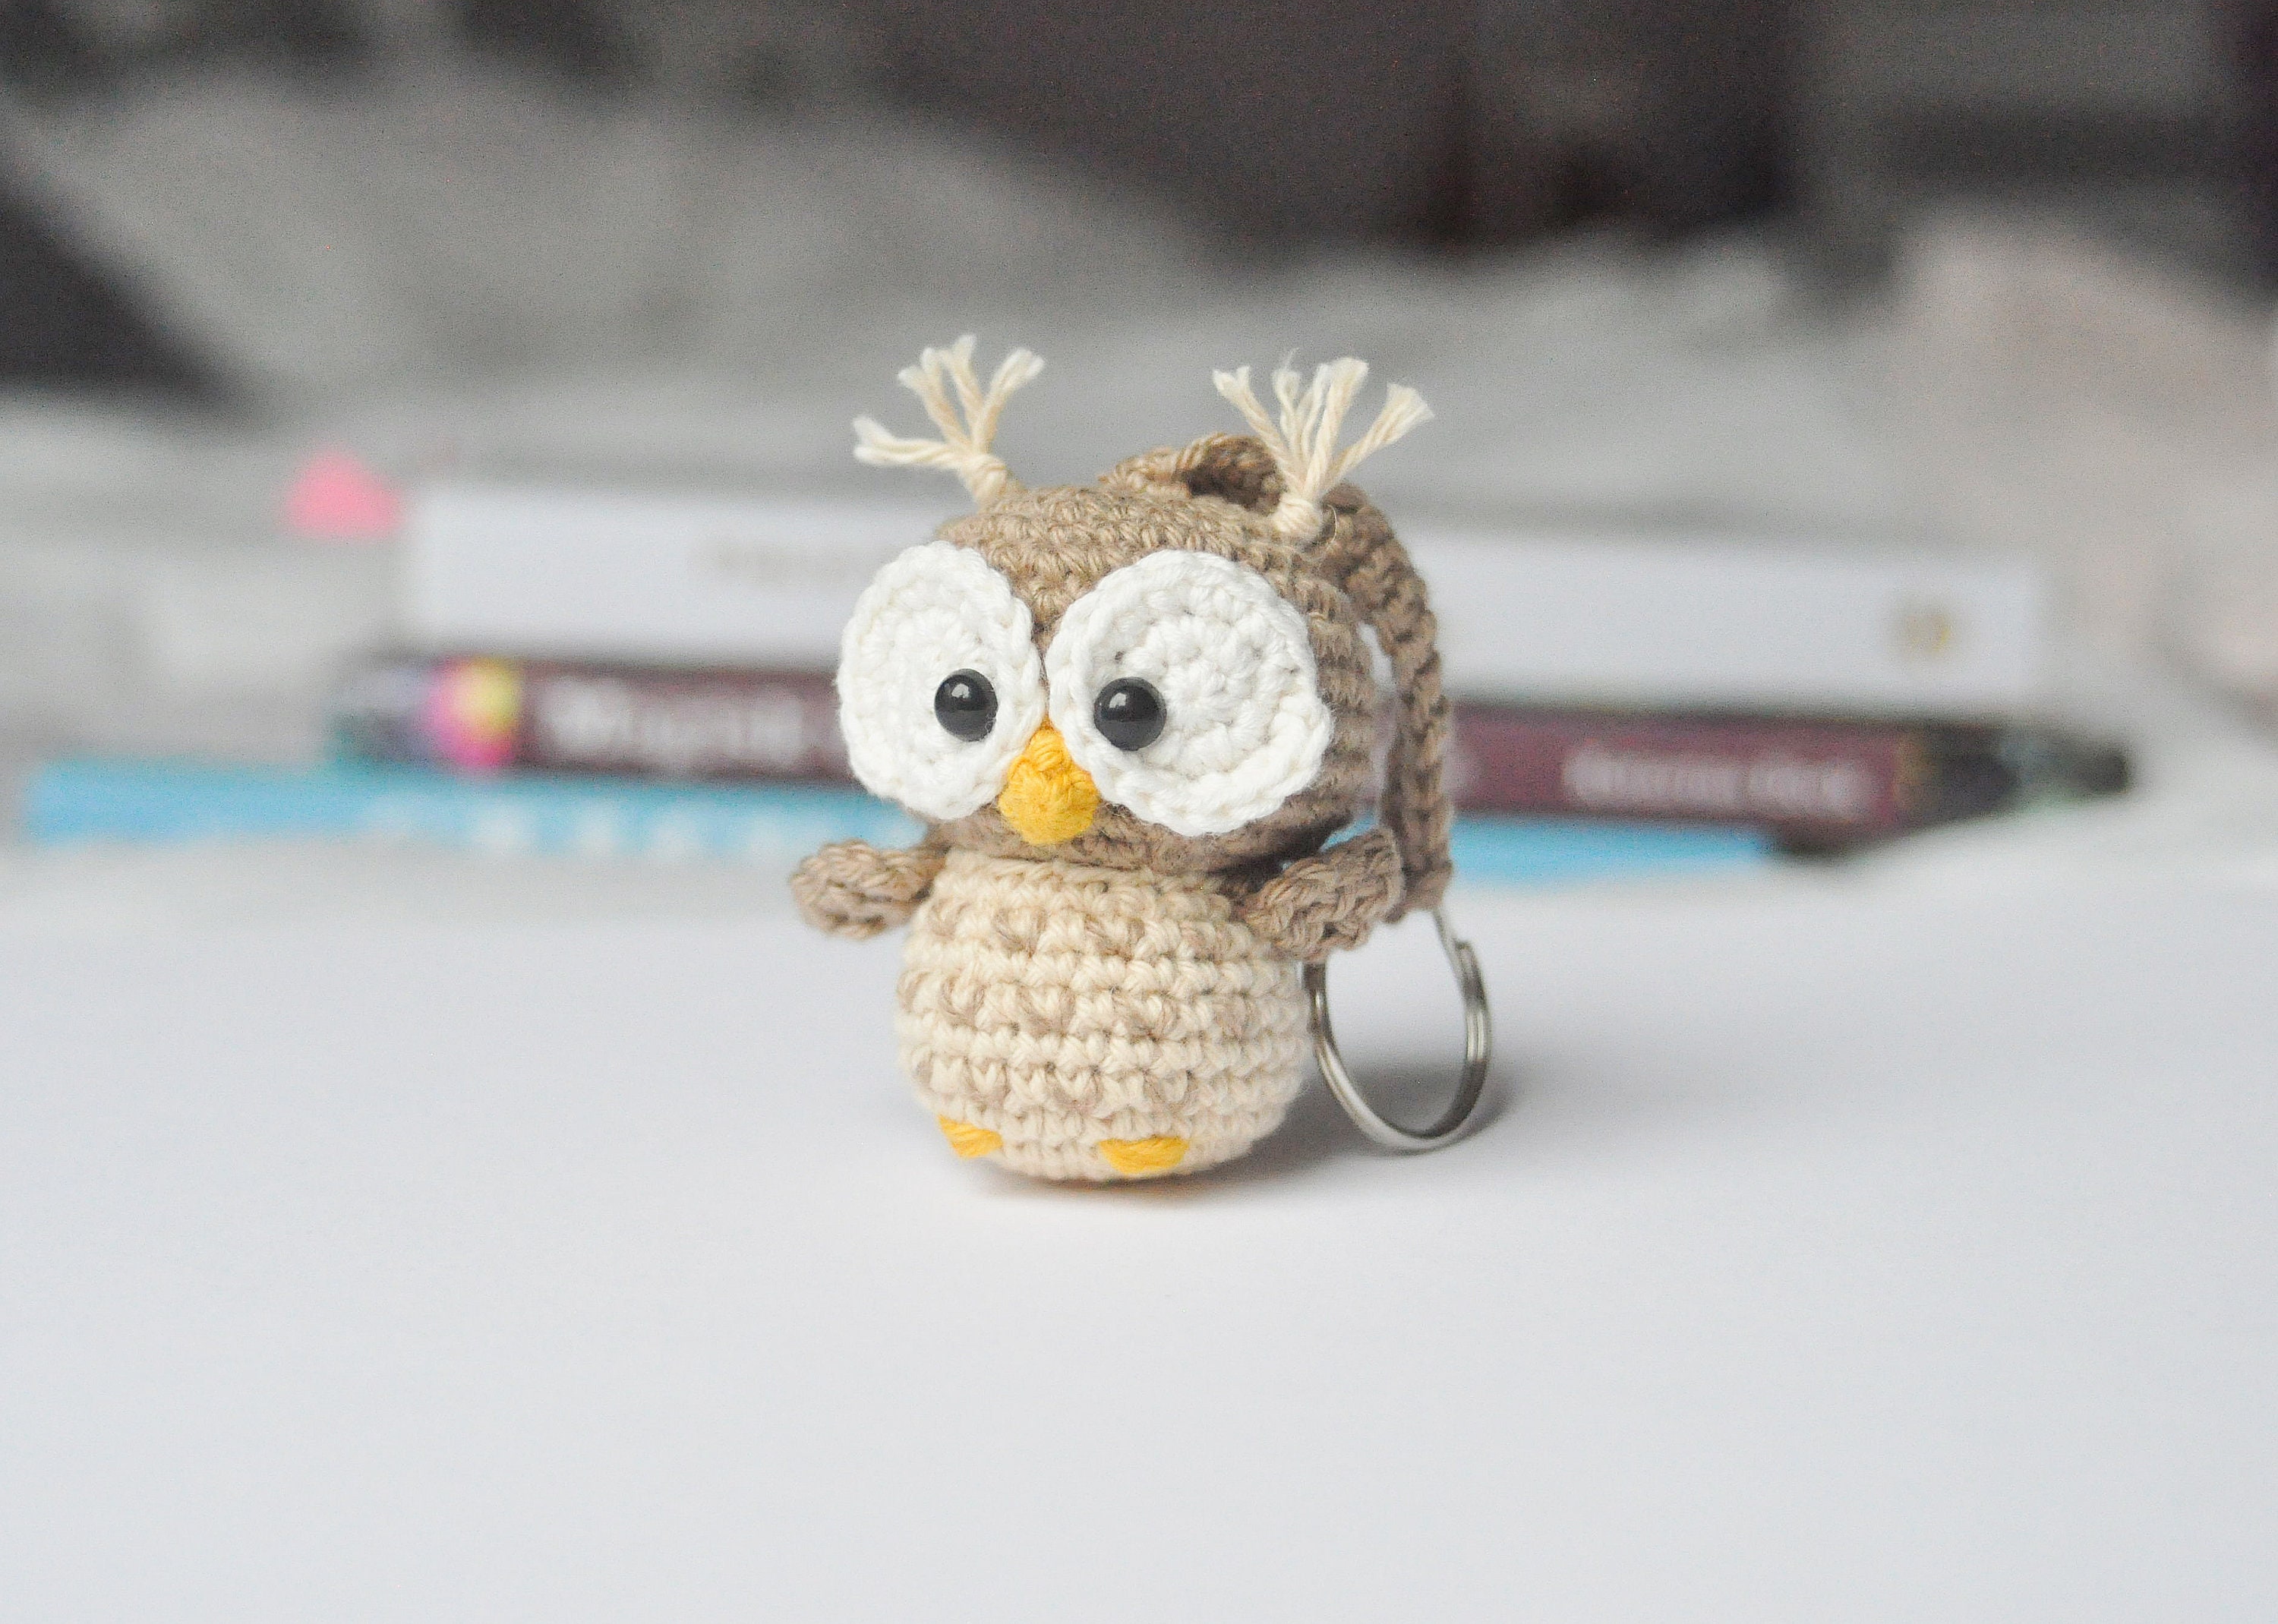 How to crochet - easy Owl Amigurumi keychain tutorial - great for beginners  - English 